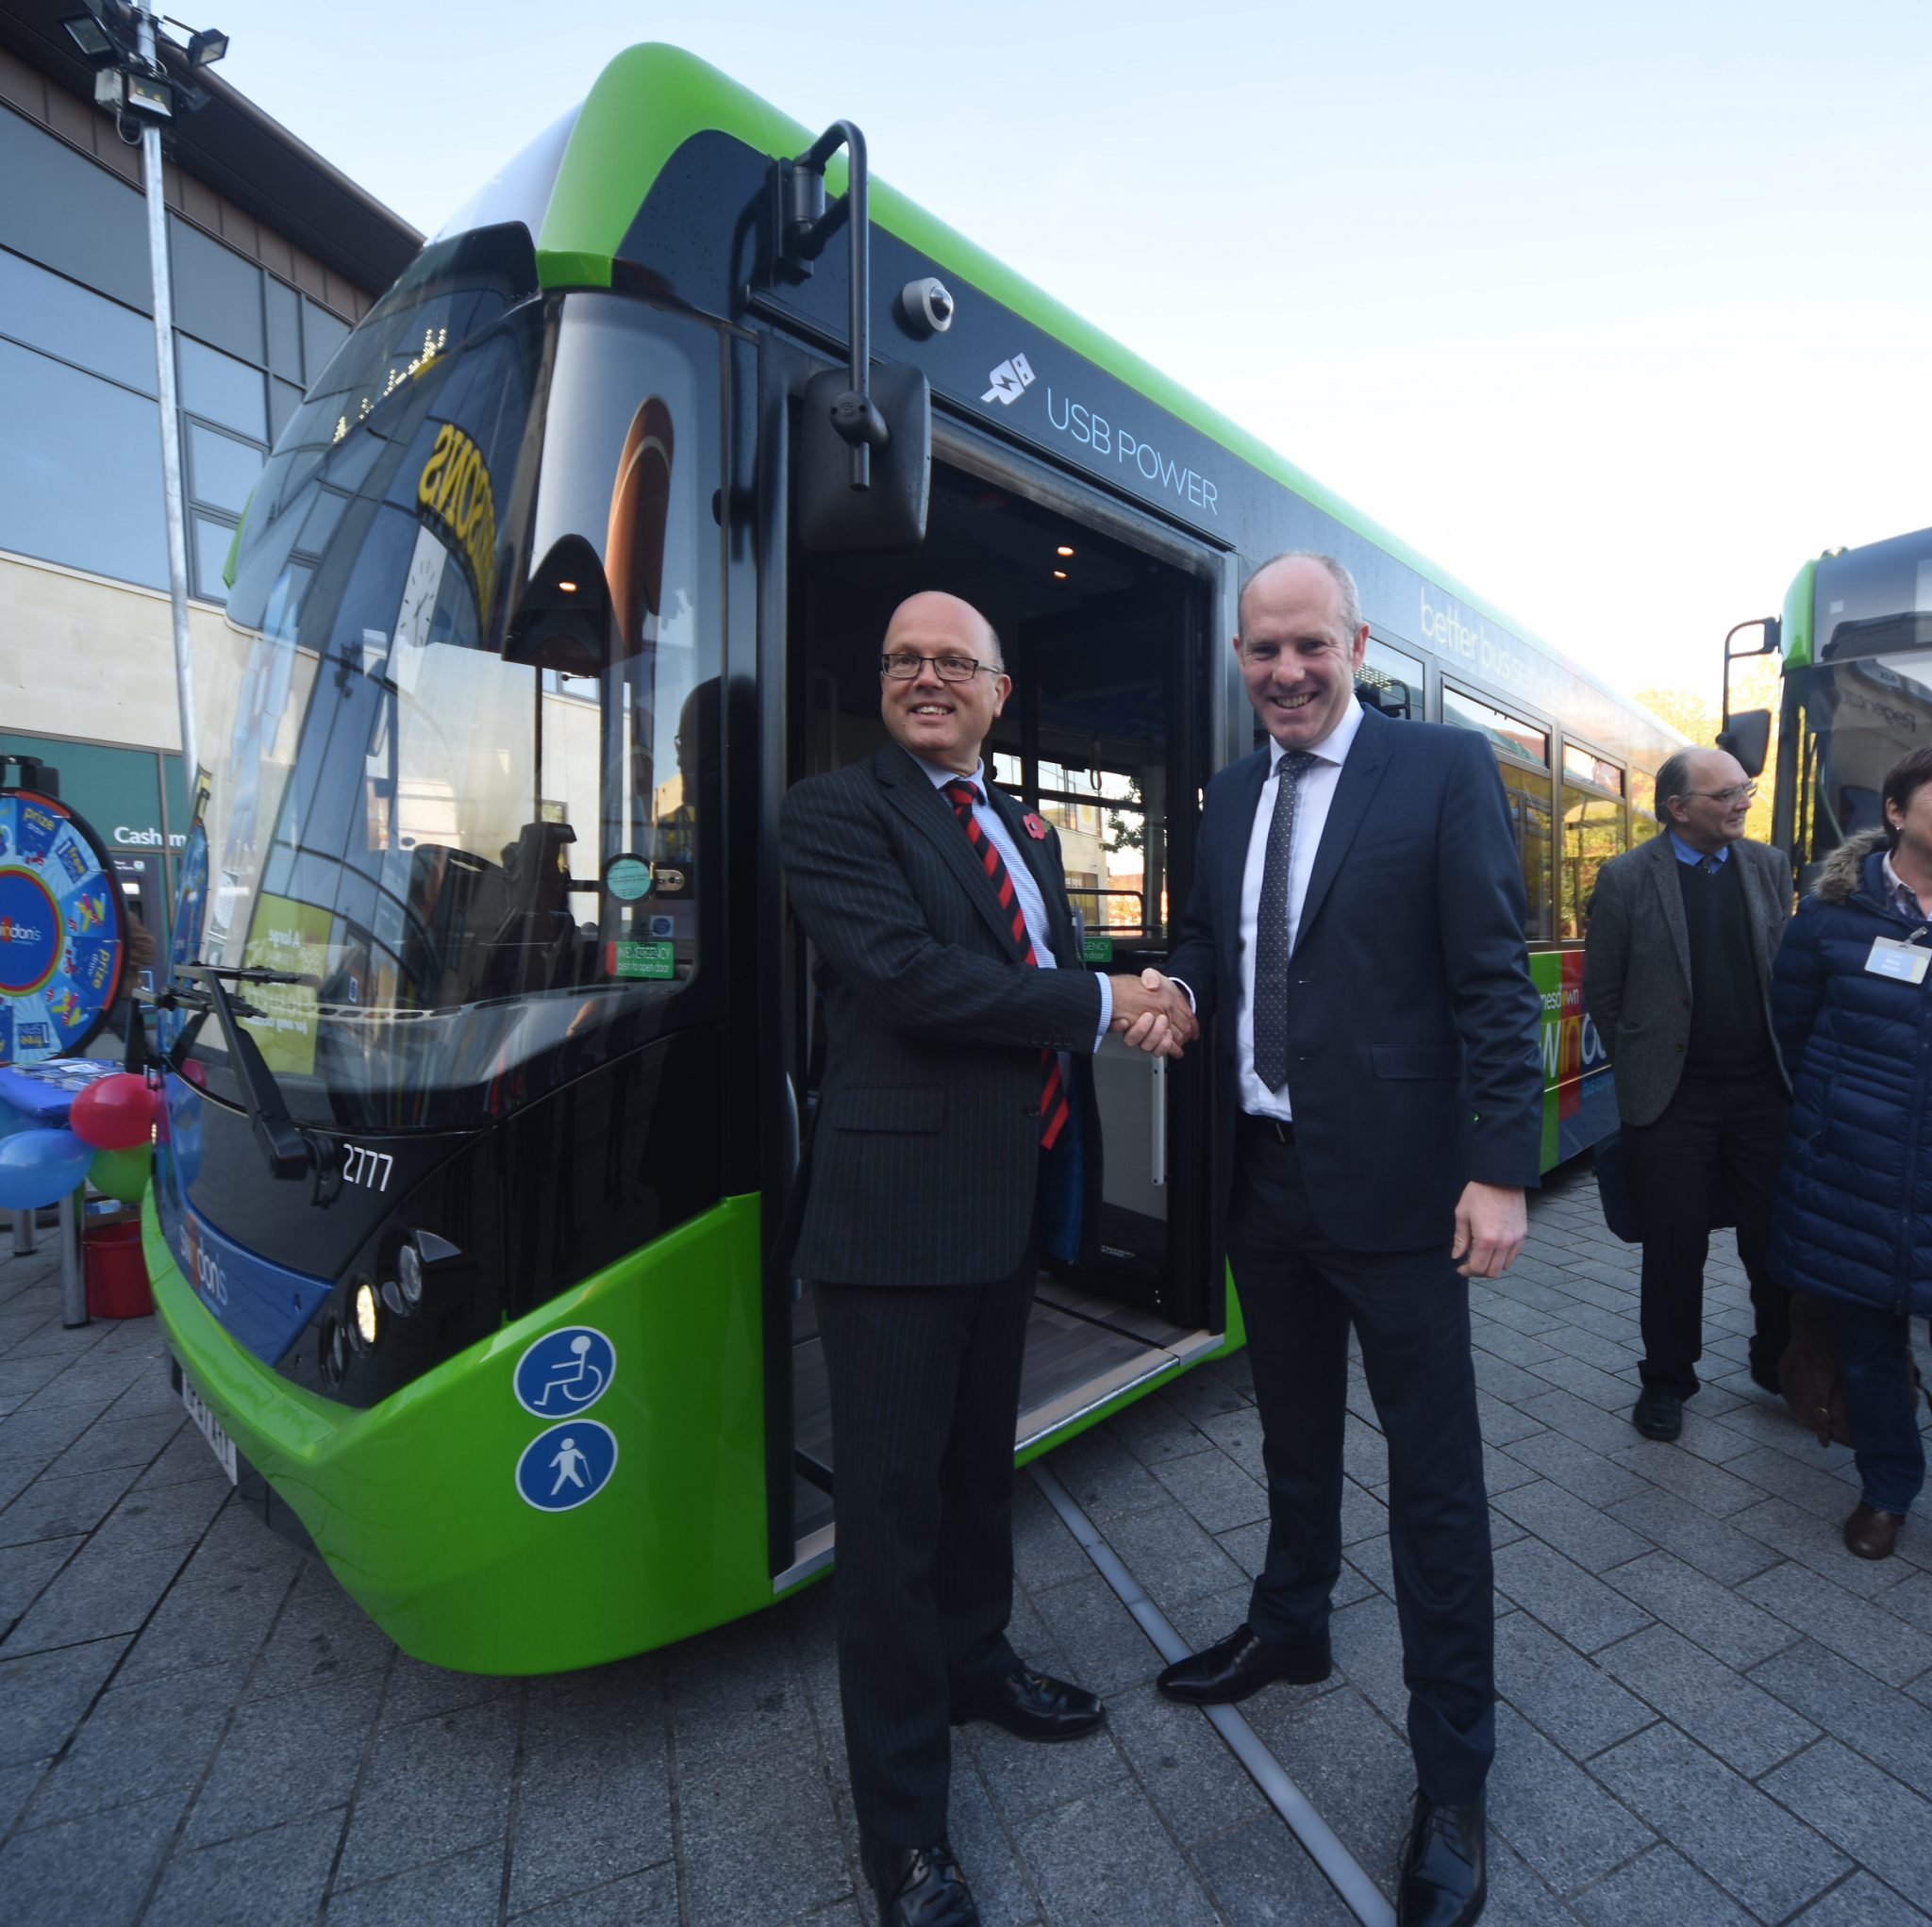 GALLERY: Swindon celebrate town’s brand new bus fleet